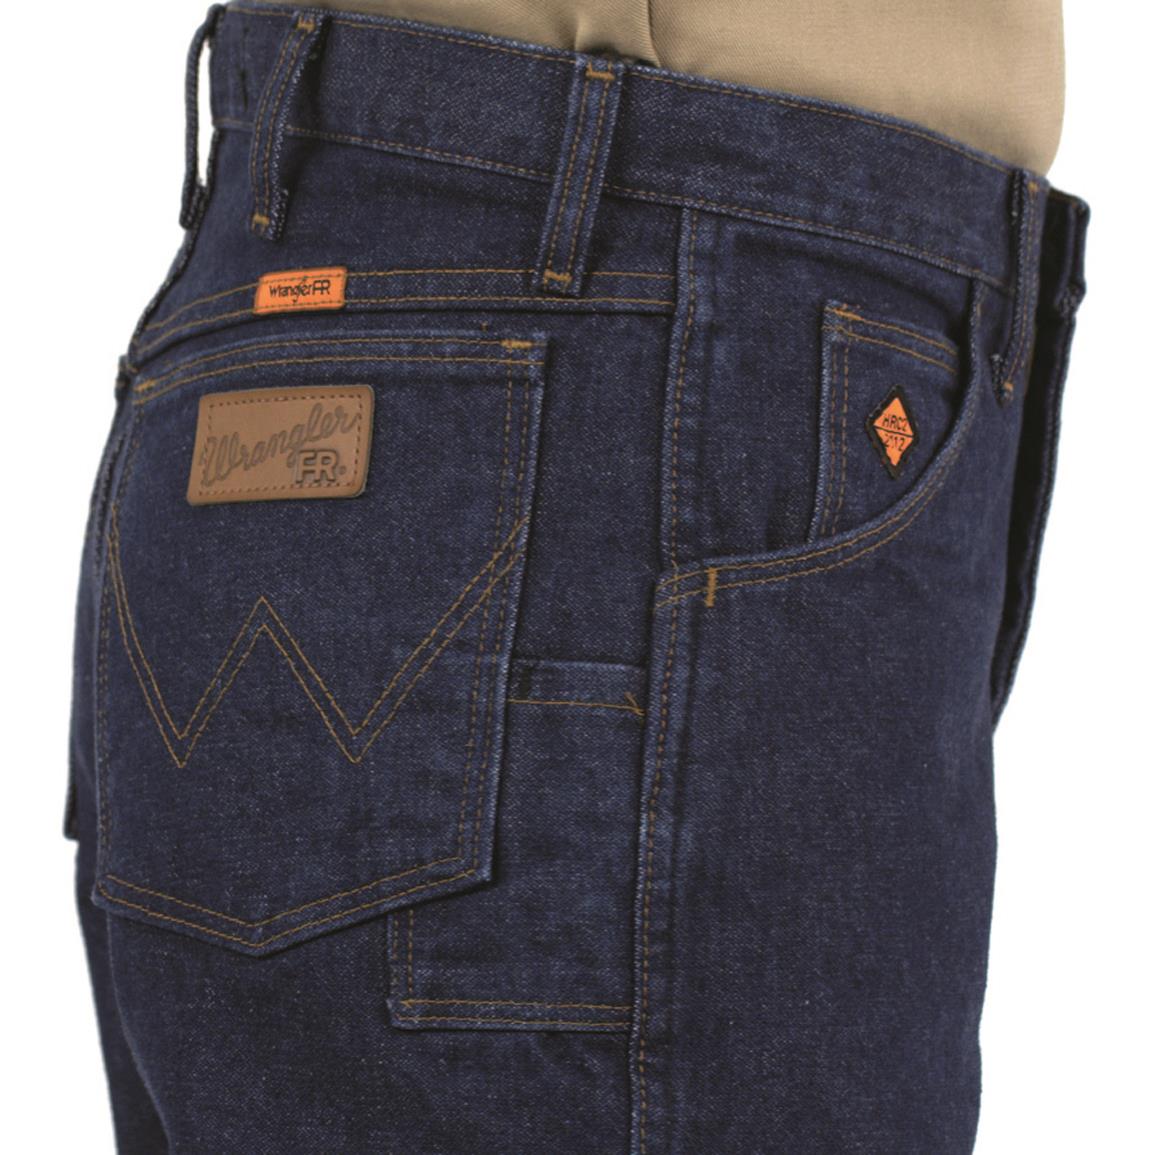 wrangler flame resistant jeans